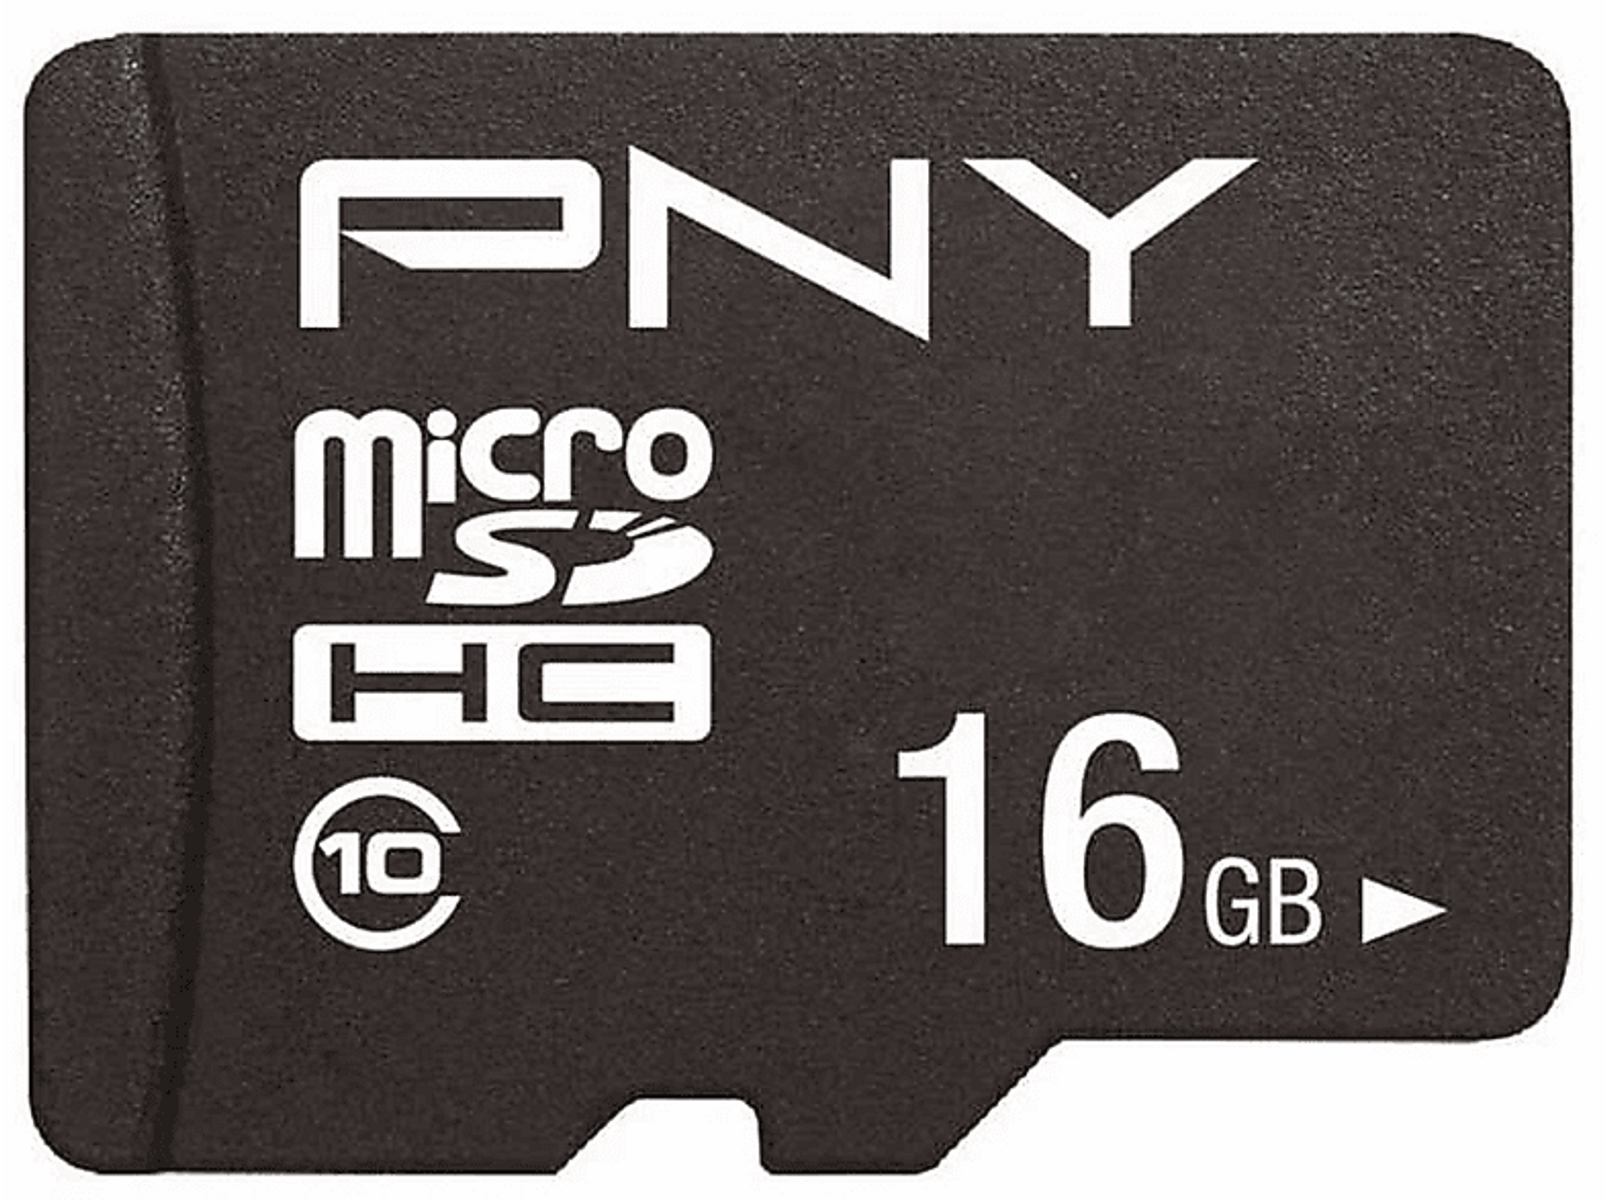 SDHC, m0000CK35U, SD MB/s Micro-SDHC, 10 GB, 16 Speicherkarte, PNY Micro-SD,